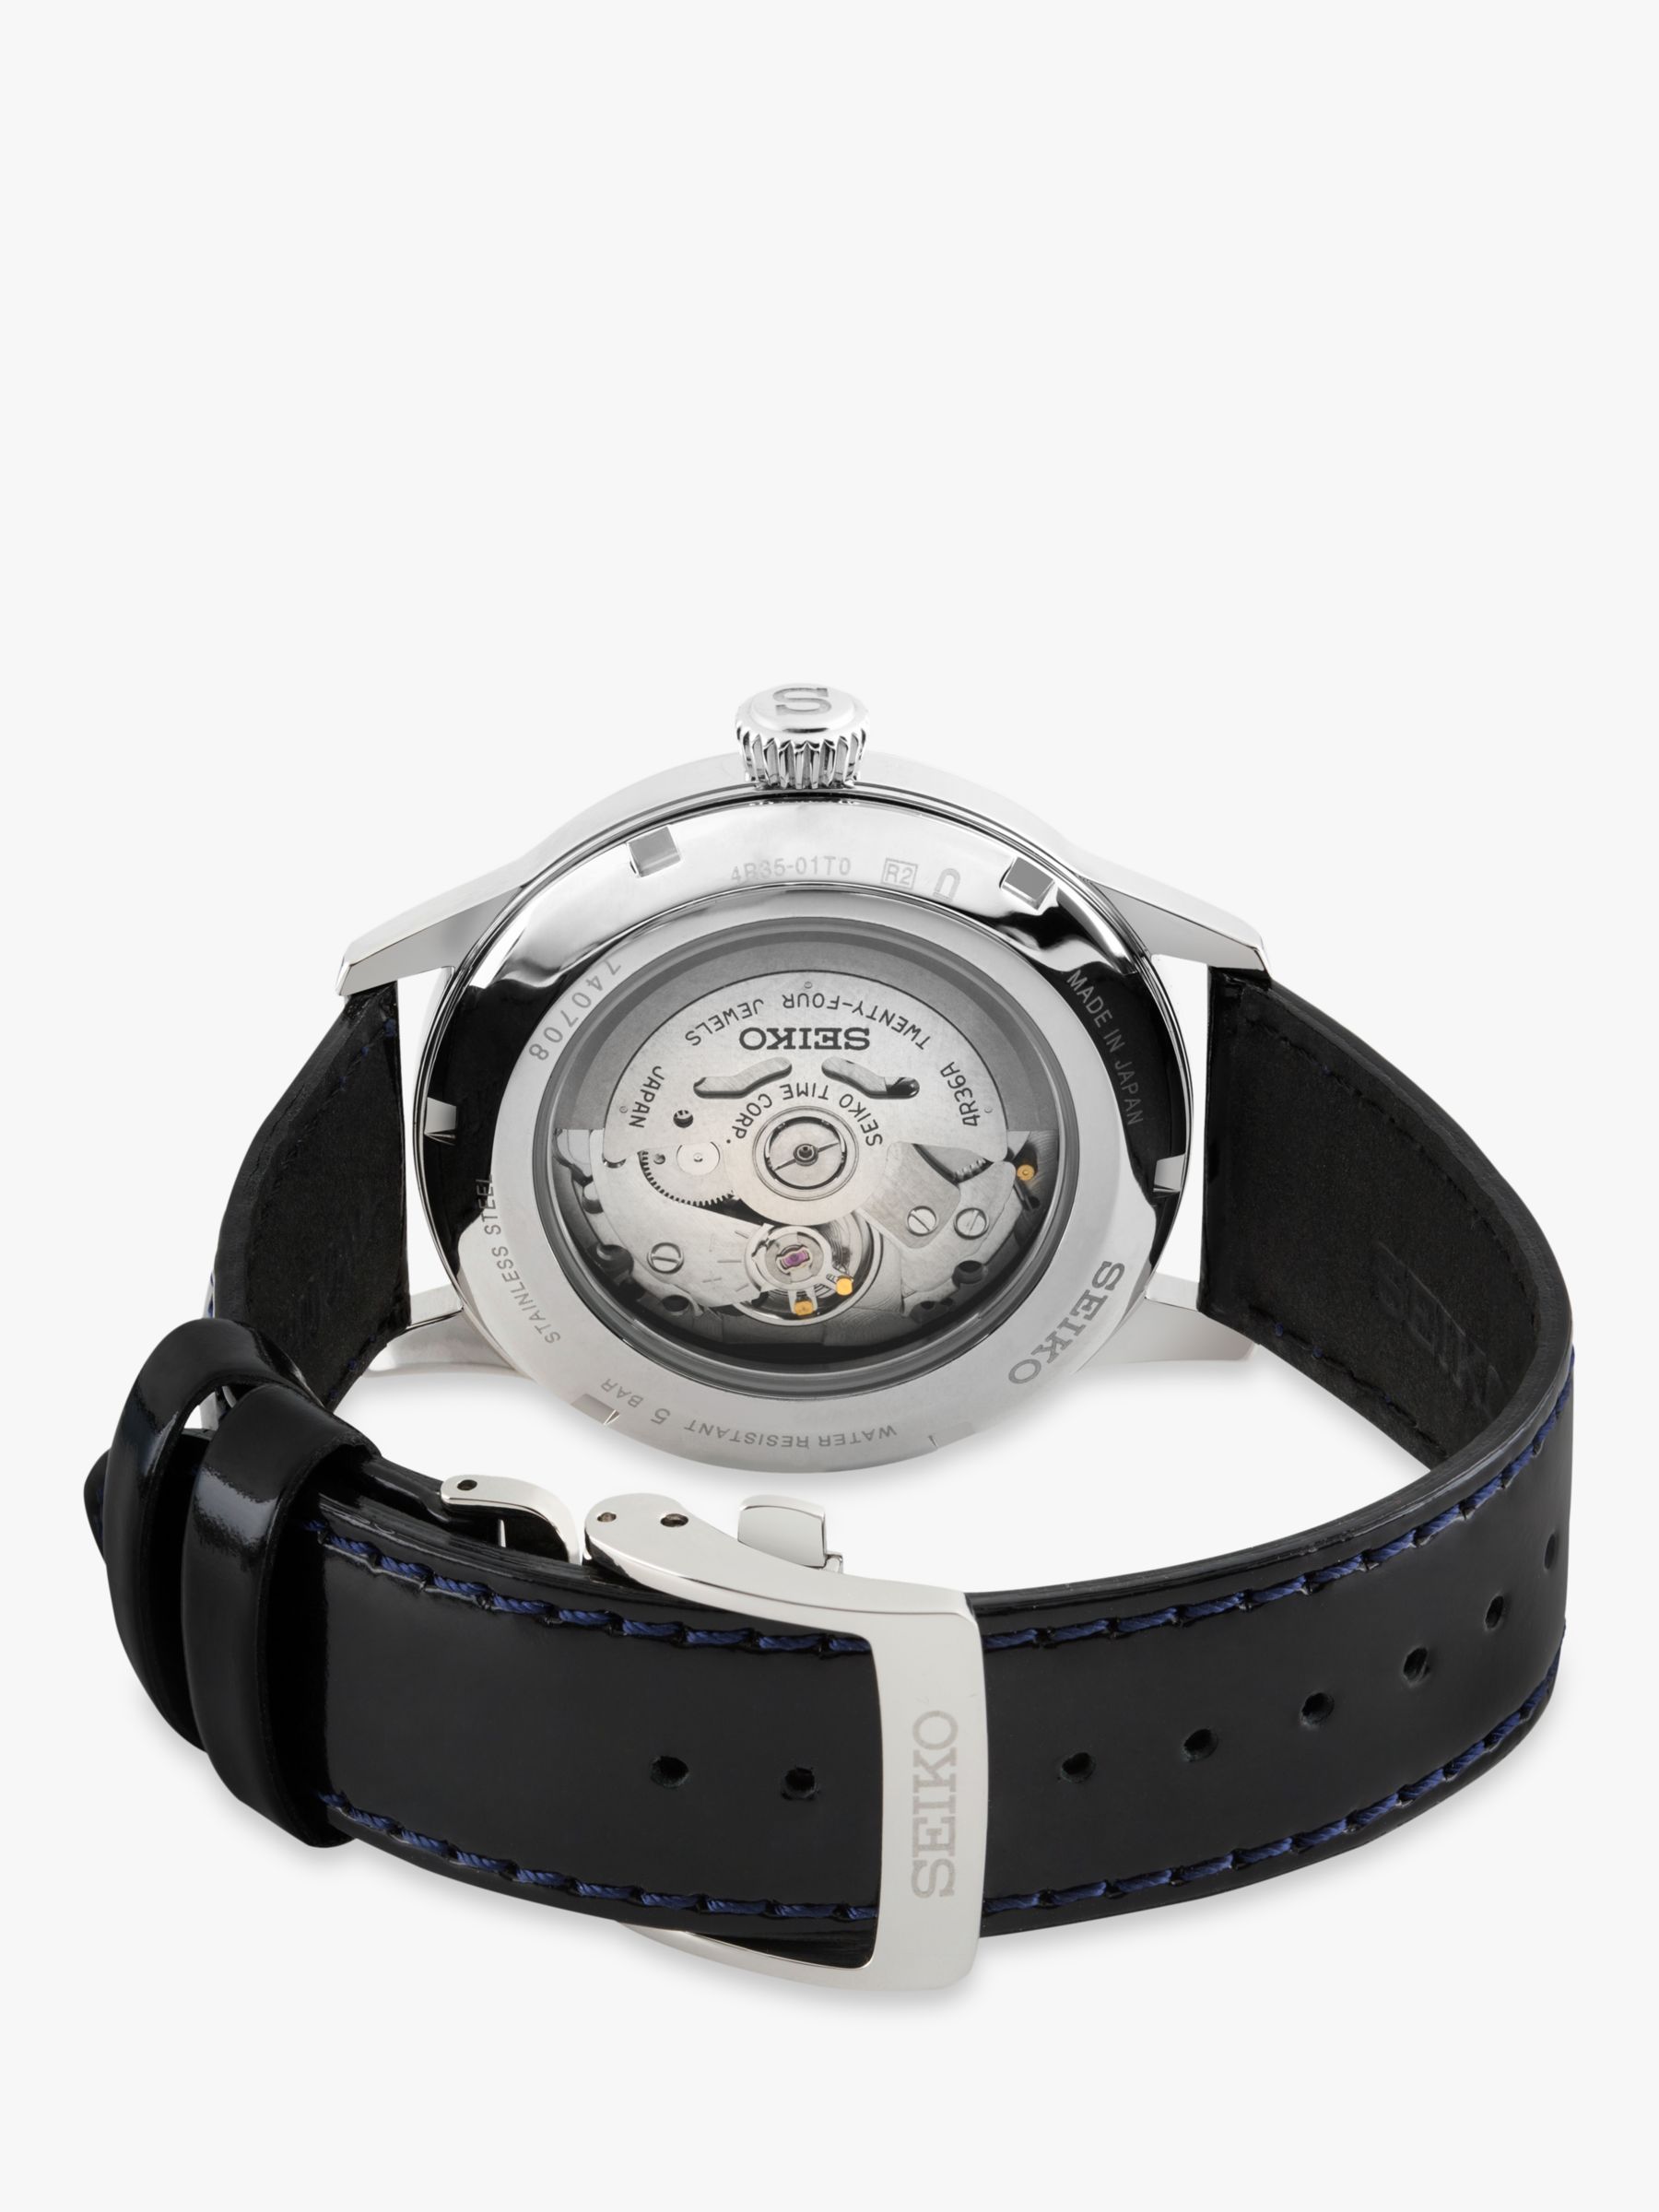 Seiko Men's Presage Automatic Date Leather Strap Watch, Black/Silver  SRPB43J1 at John Lewis & Partners